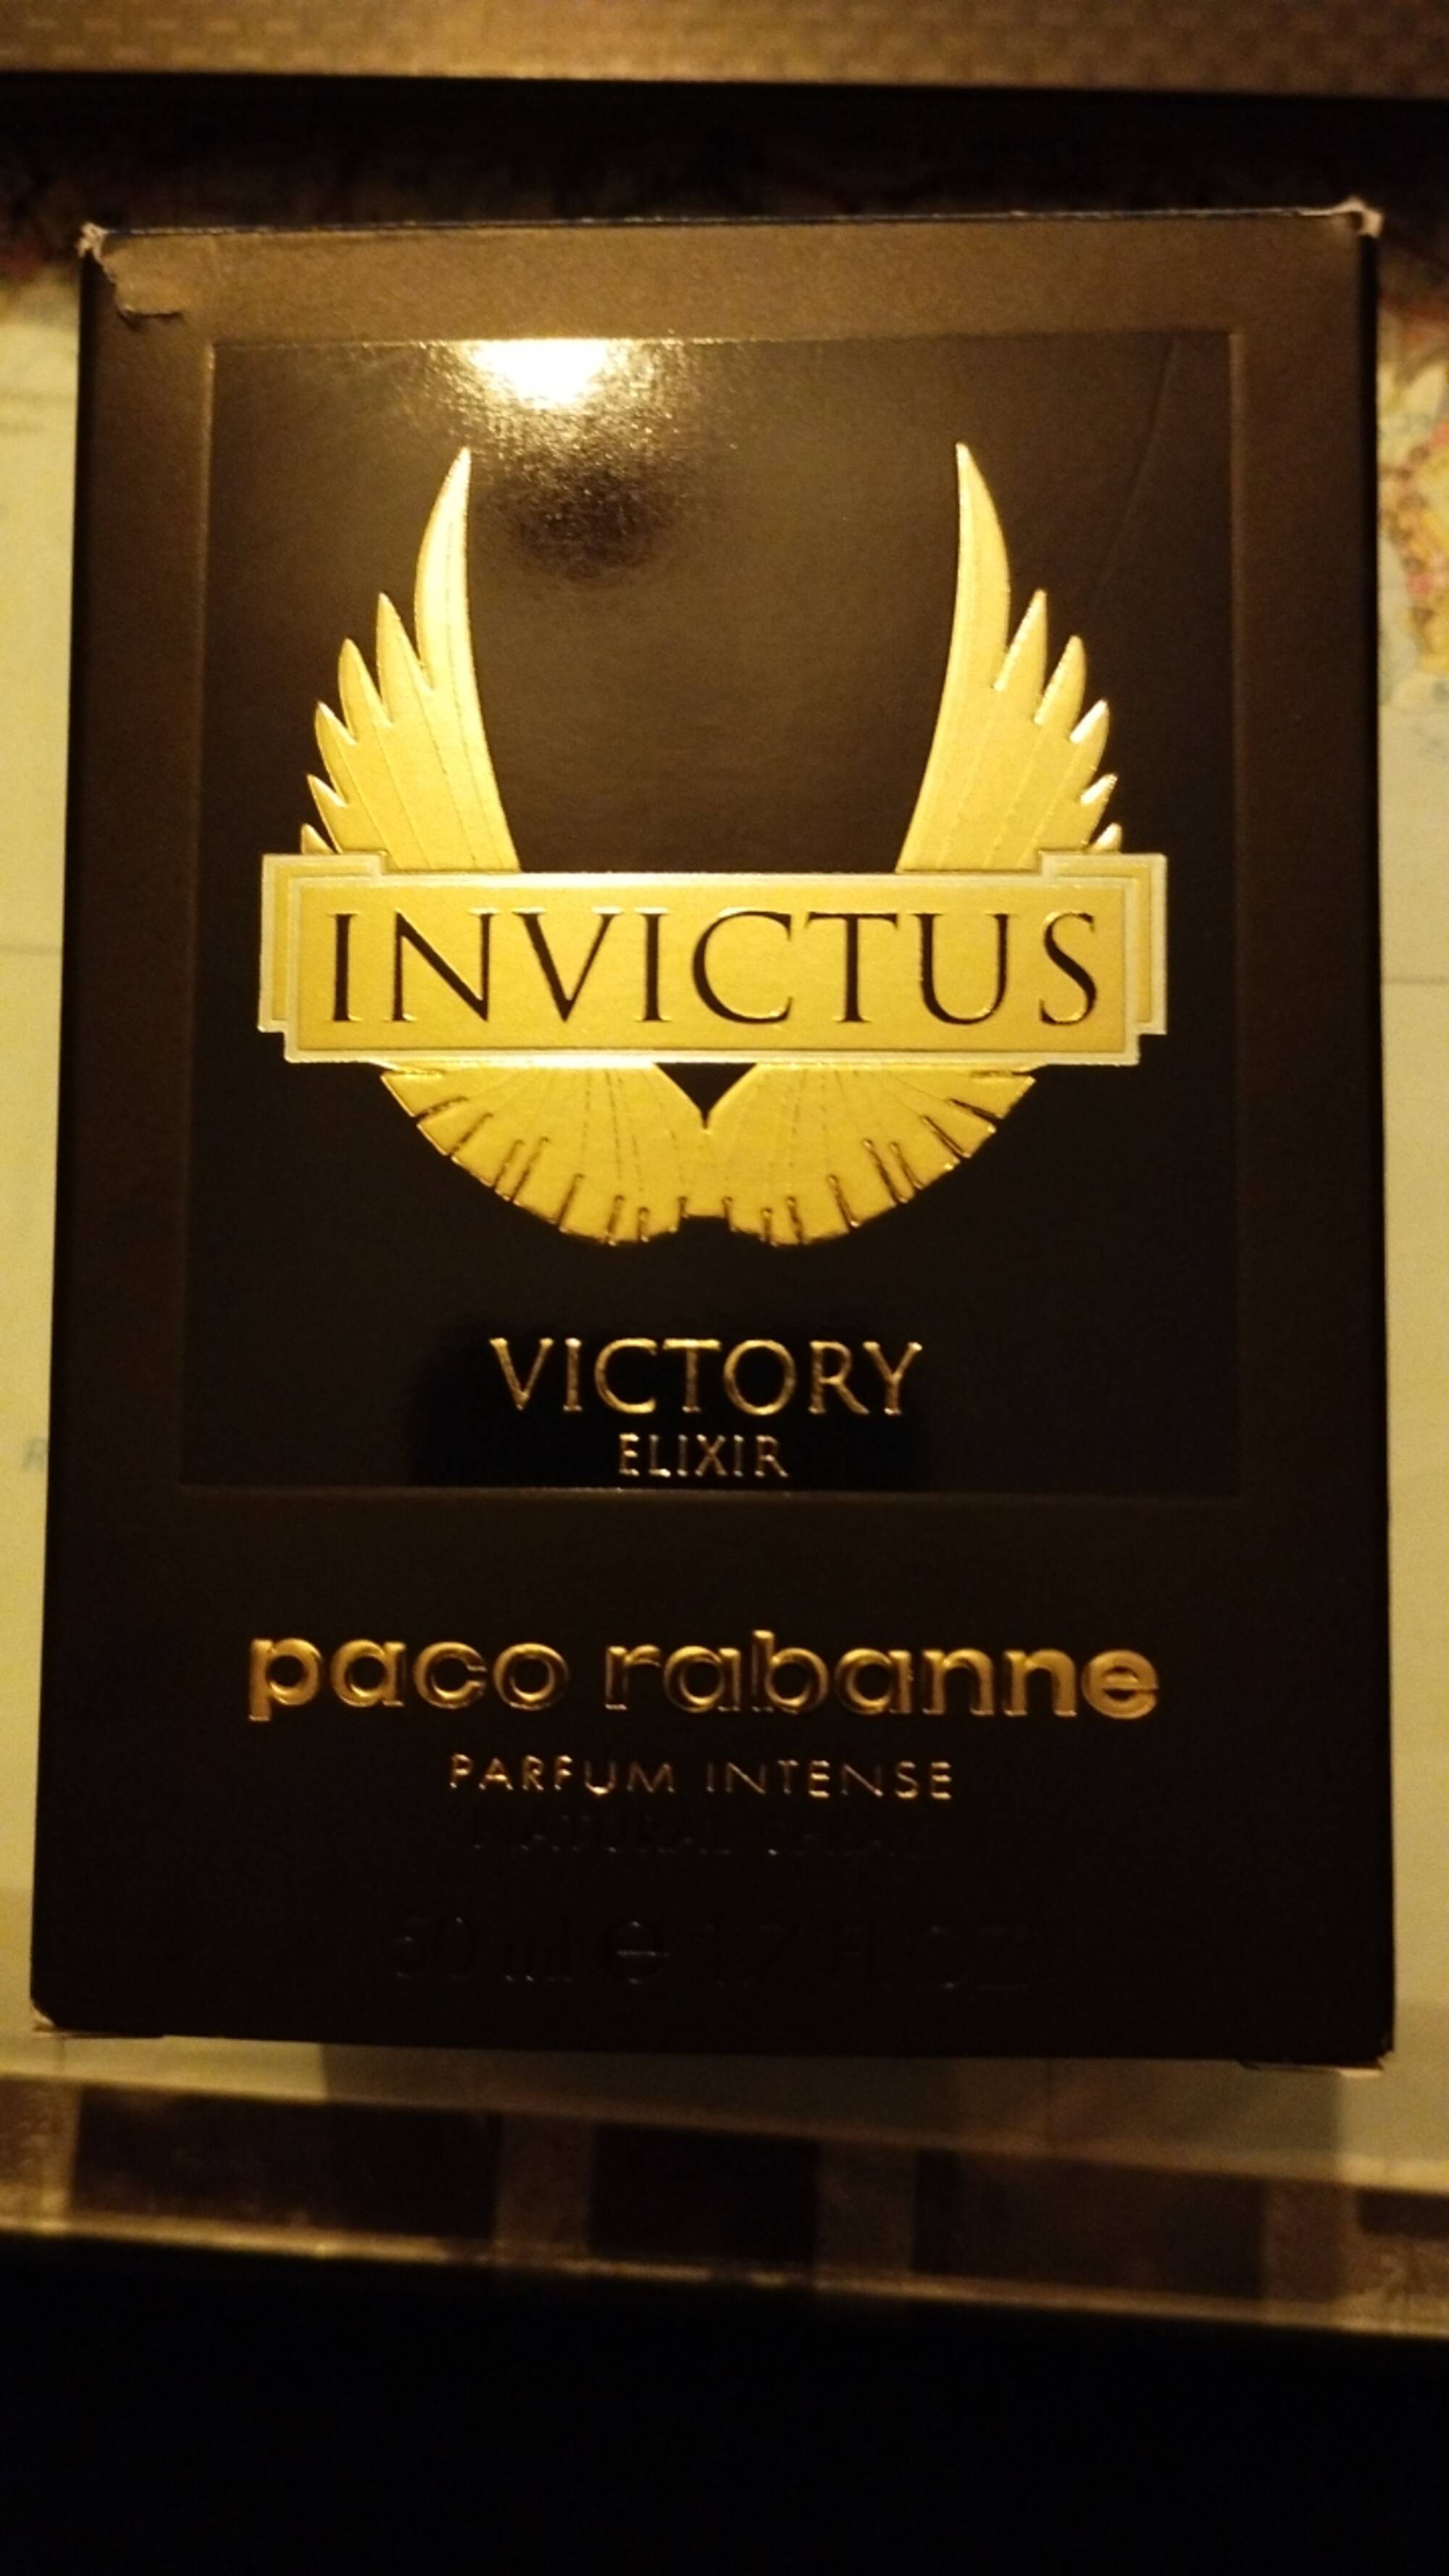 PACO RABANNE - Invictus Victory elixir - Parfum intense